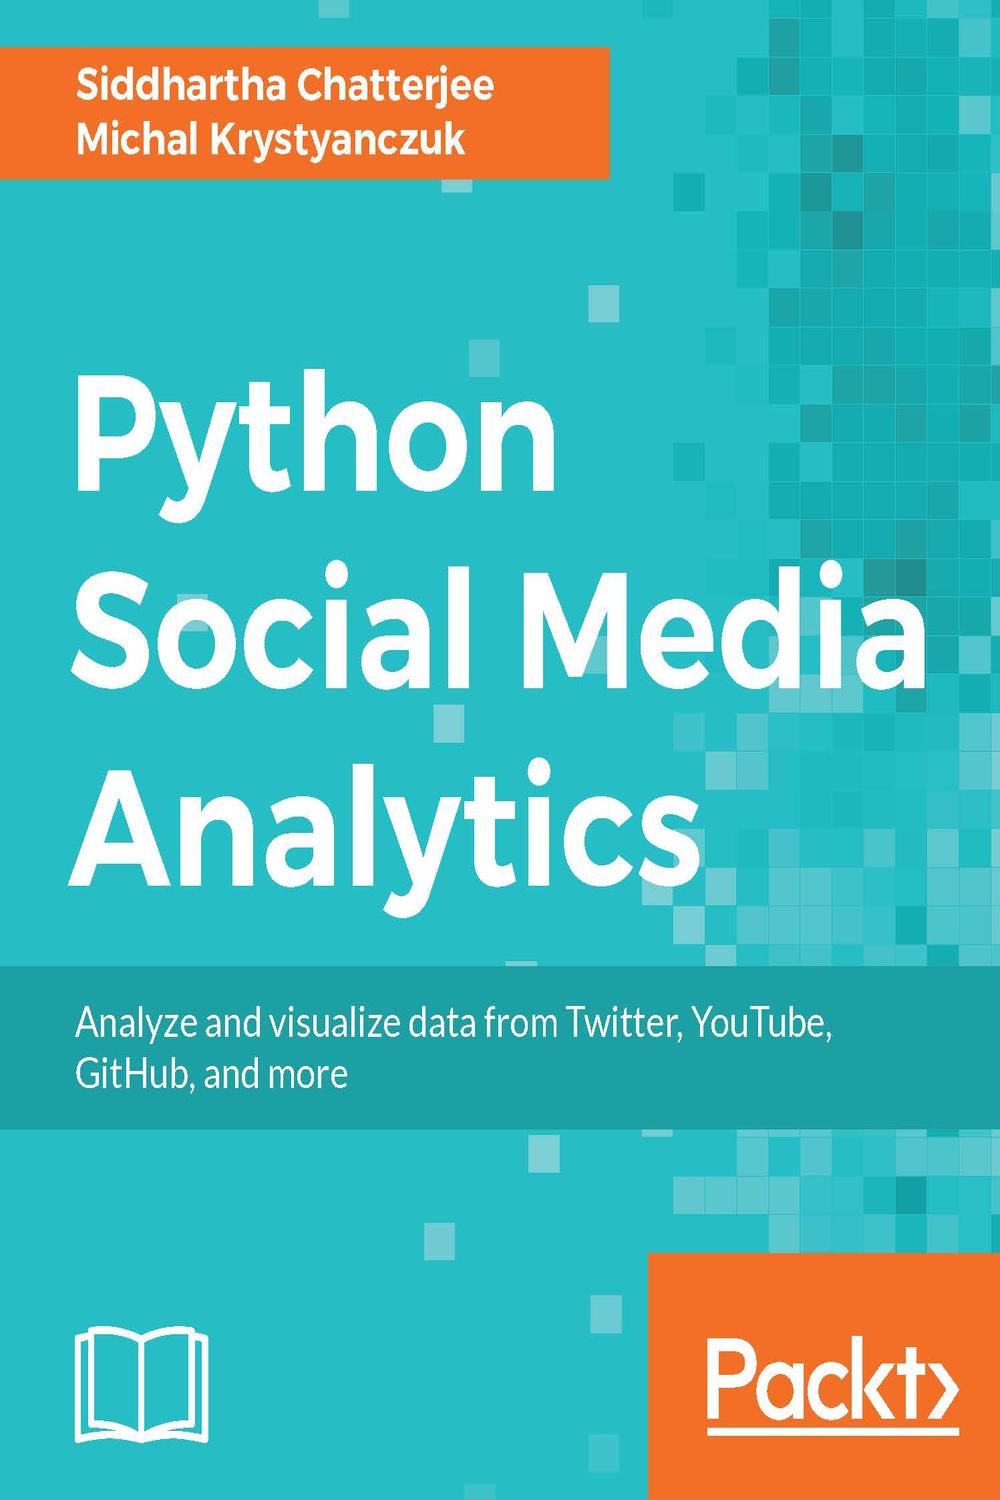 PDF] Python Social Media Analytics by Siddhartha Chatterjee | Perlego